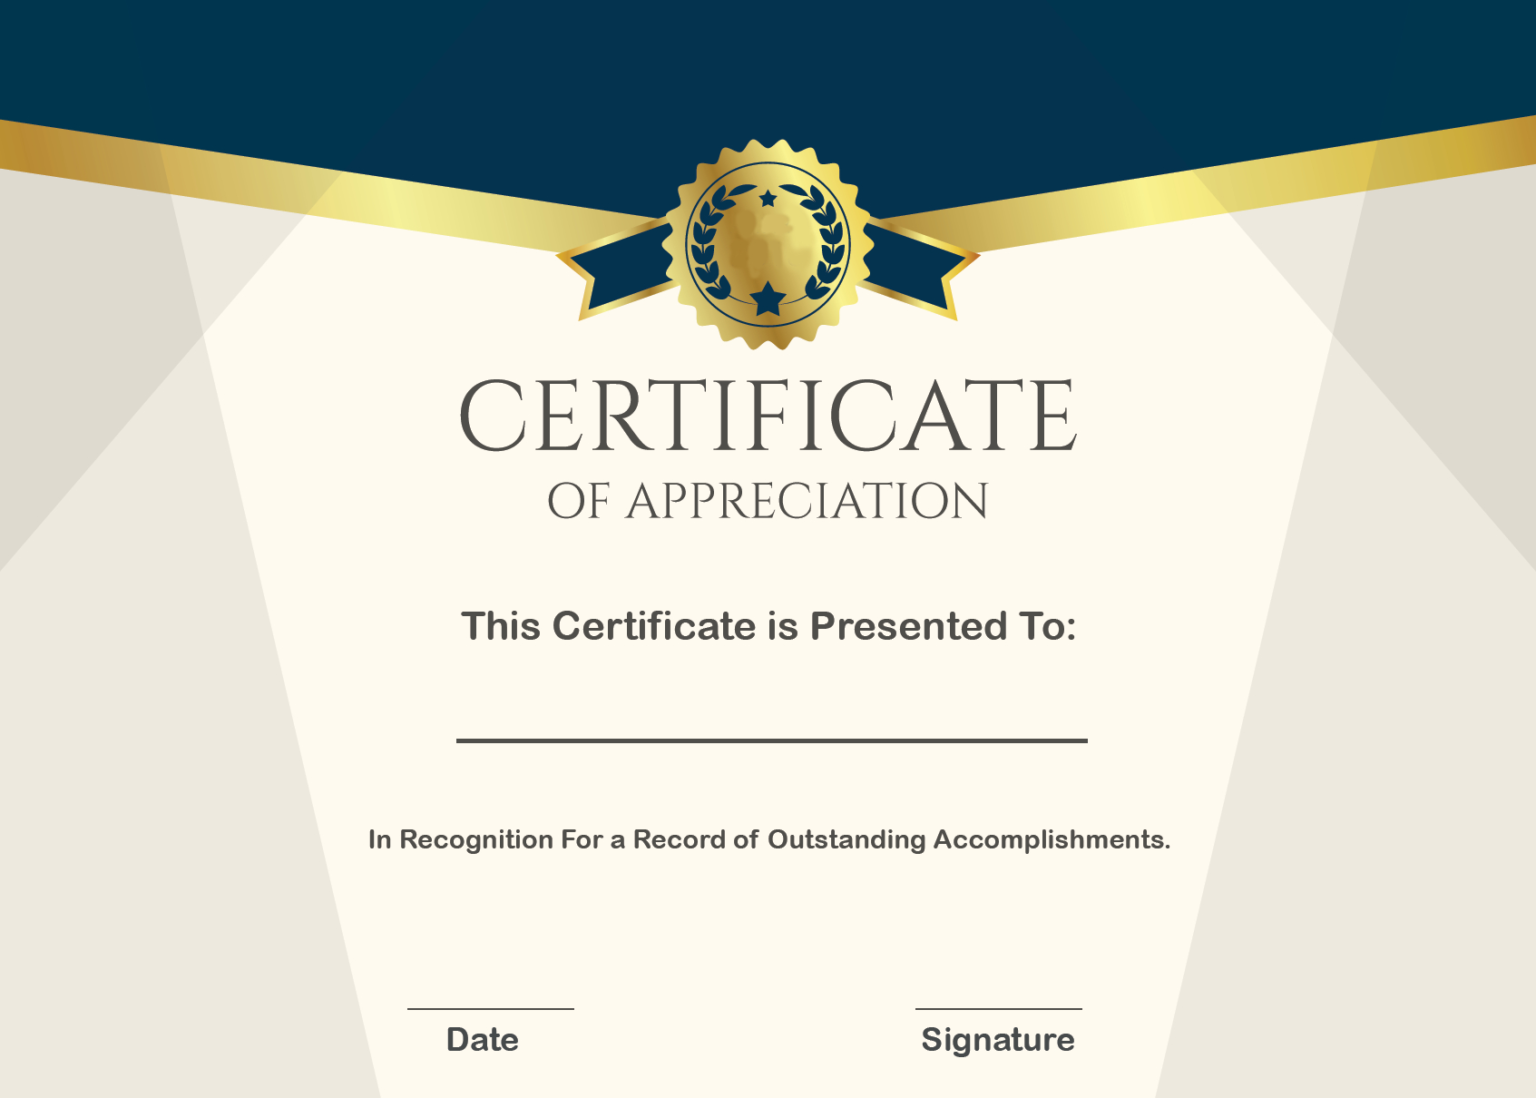 Free Sample Format Of Certificate Of Appreciation Template Regarding